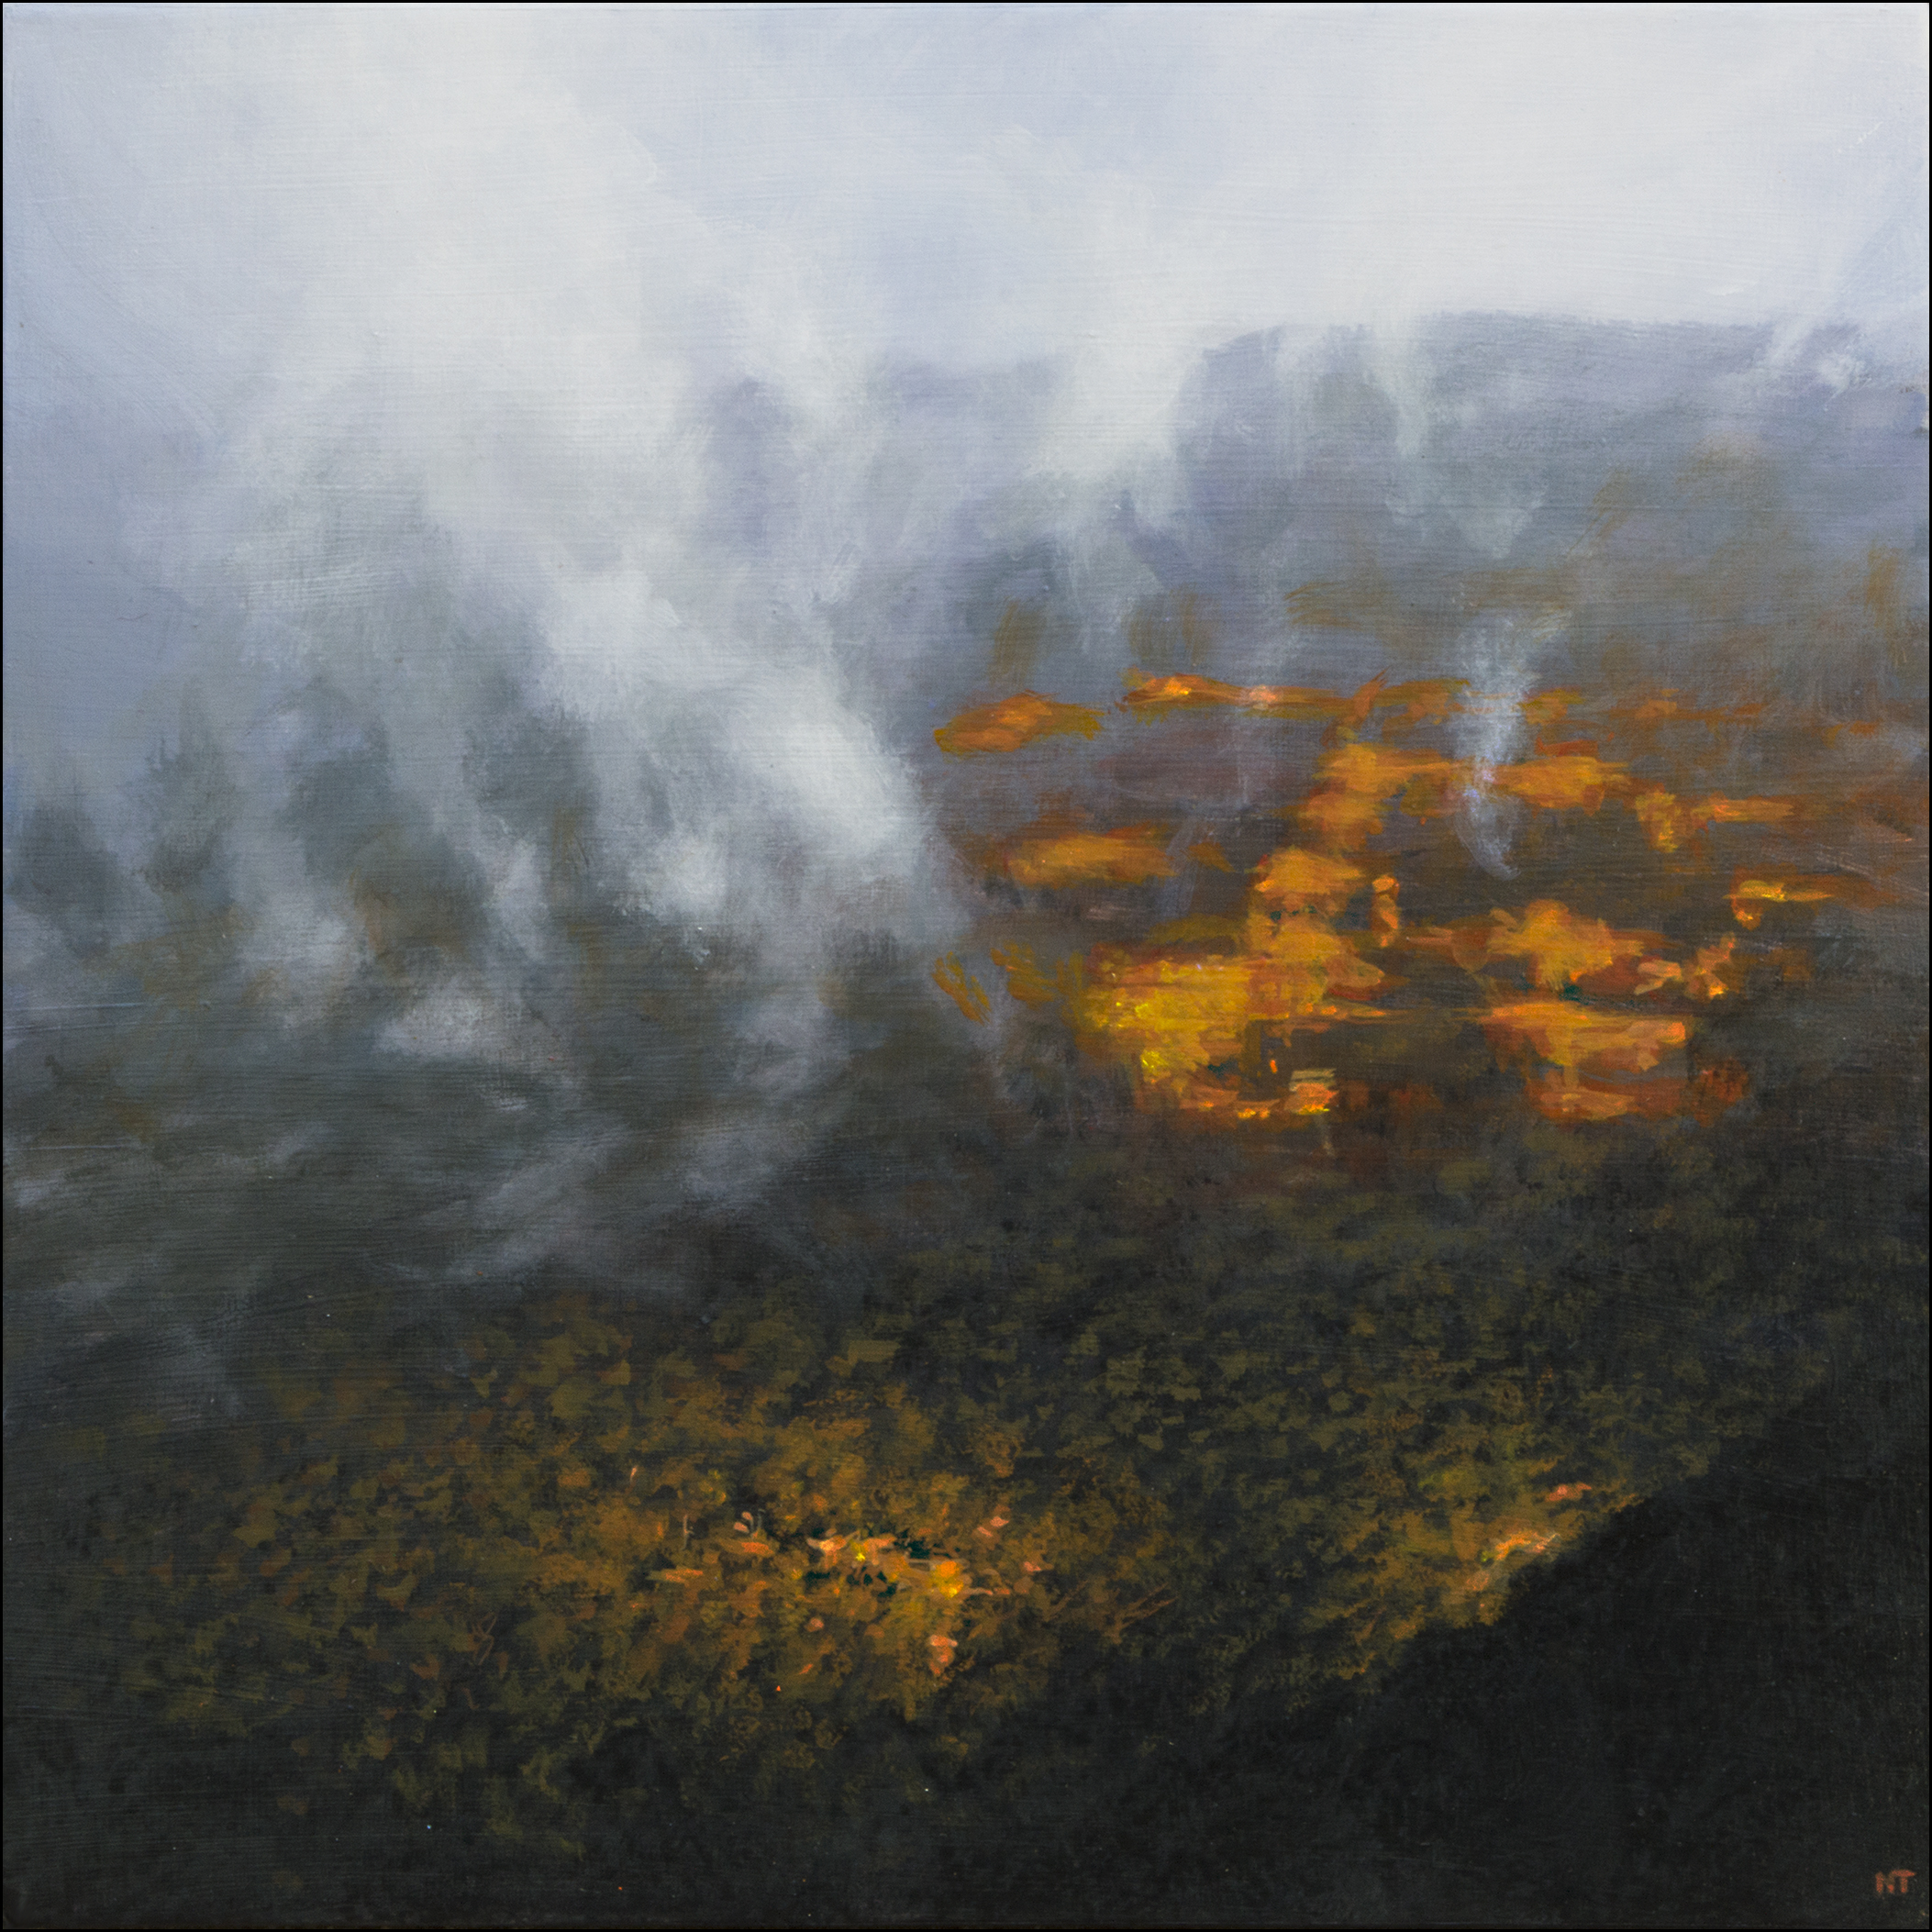 Neil Taylor 'Sketch For Burning Mist' acrylic on canvas 40 x 40cm $3,300